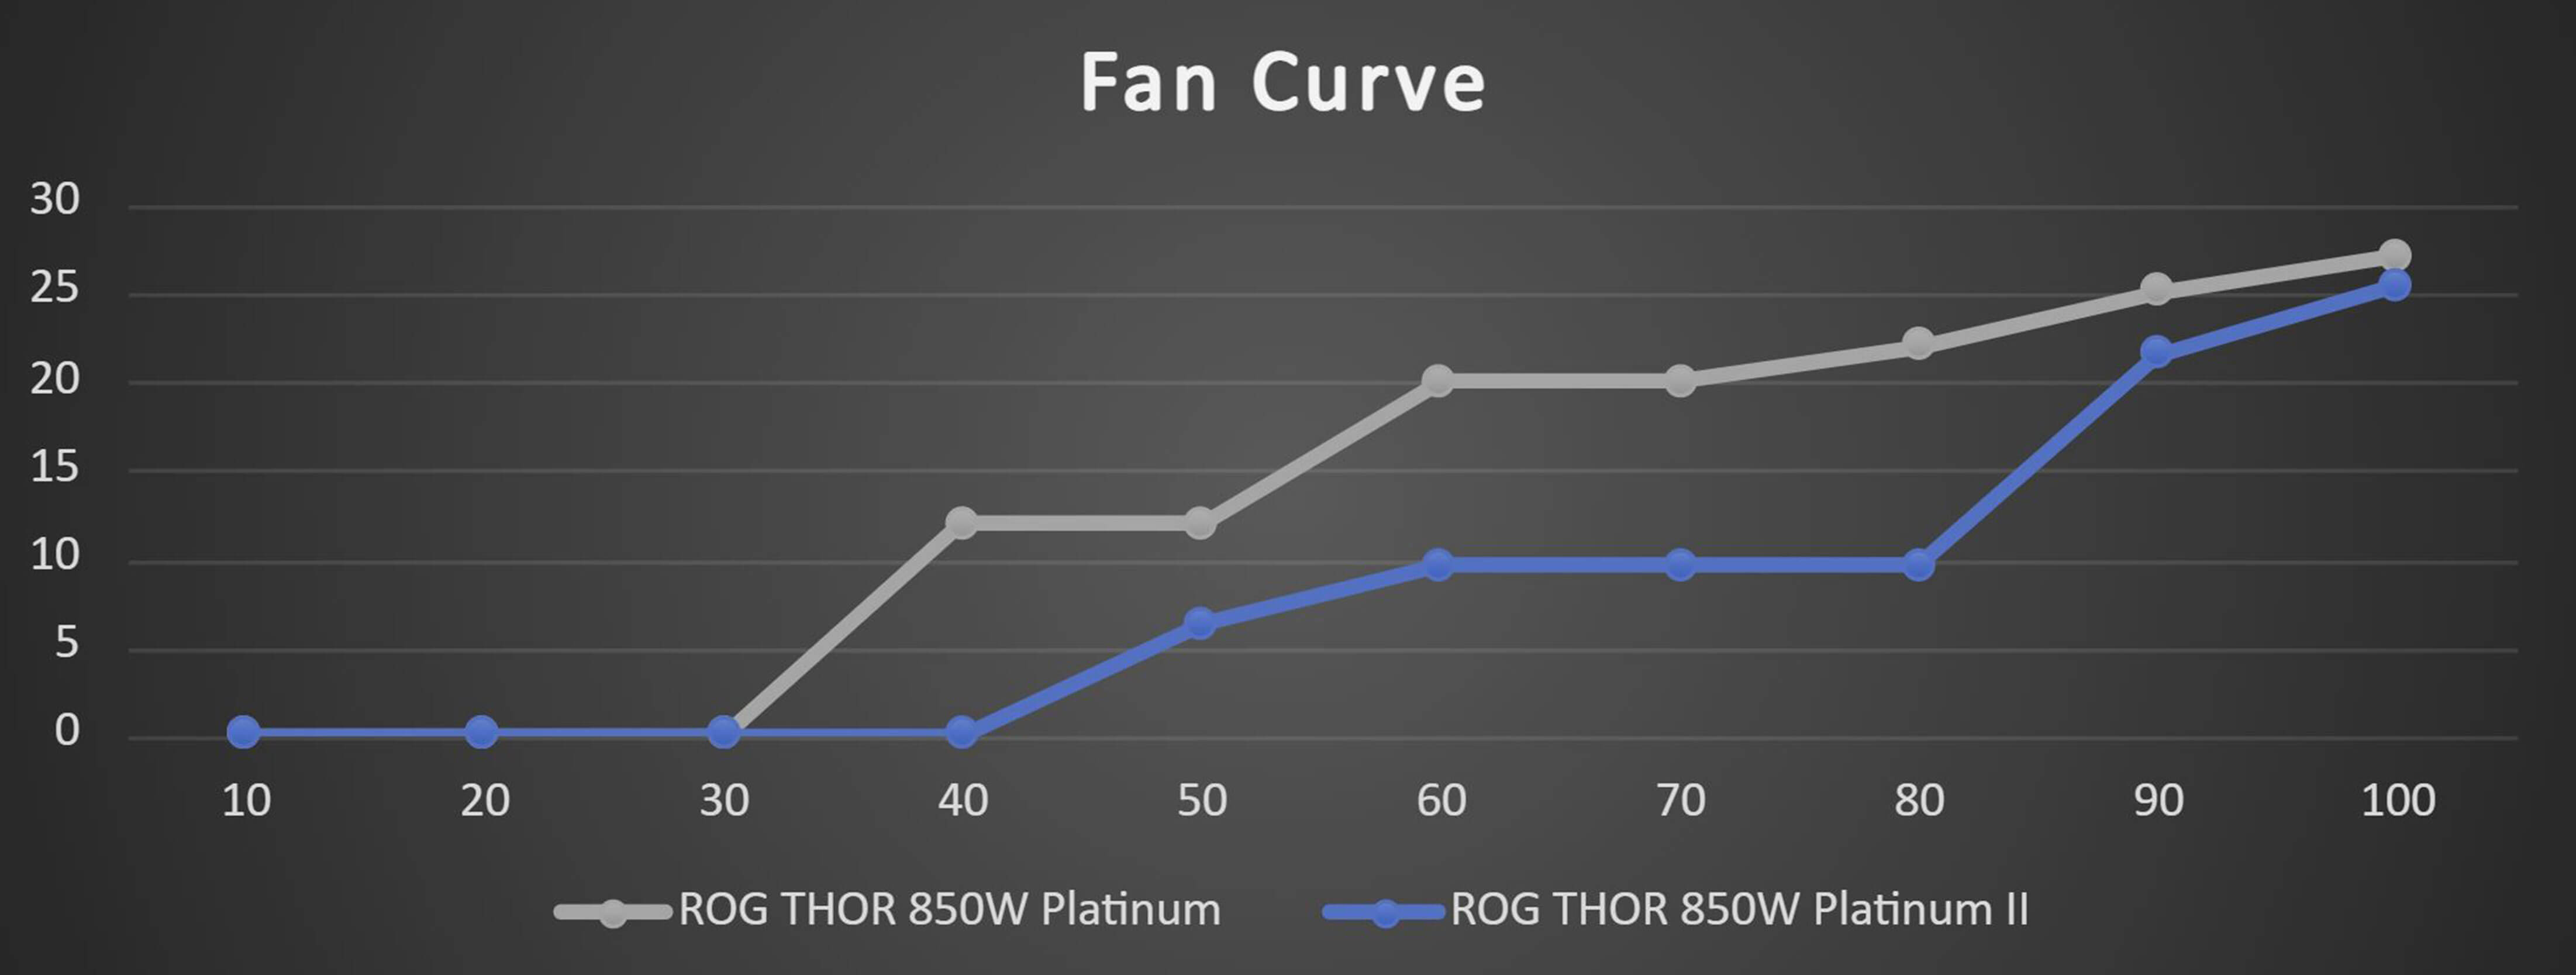 ROG Thor 850W Platinum II fan curve graph.